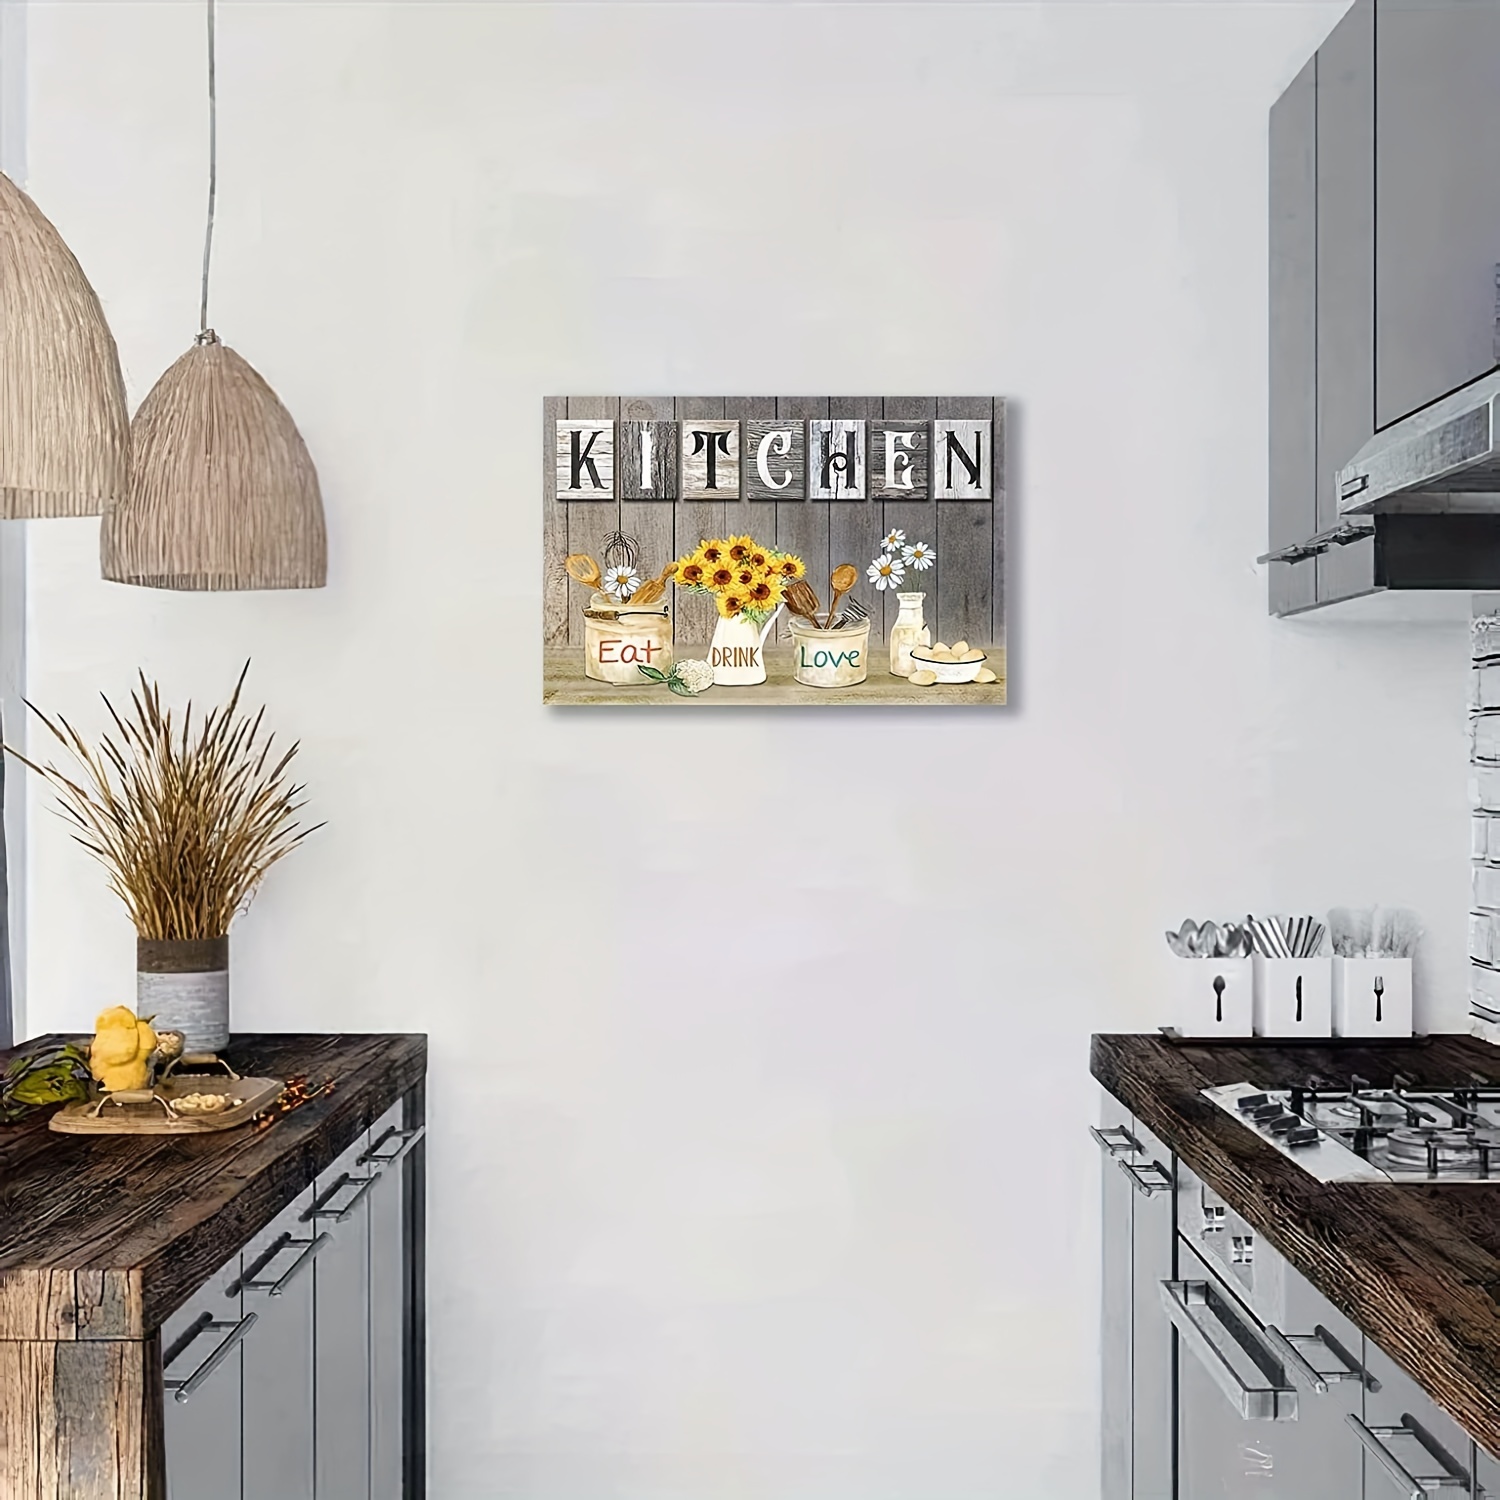 modern farmhouse kitchen wall decor ideas